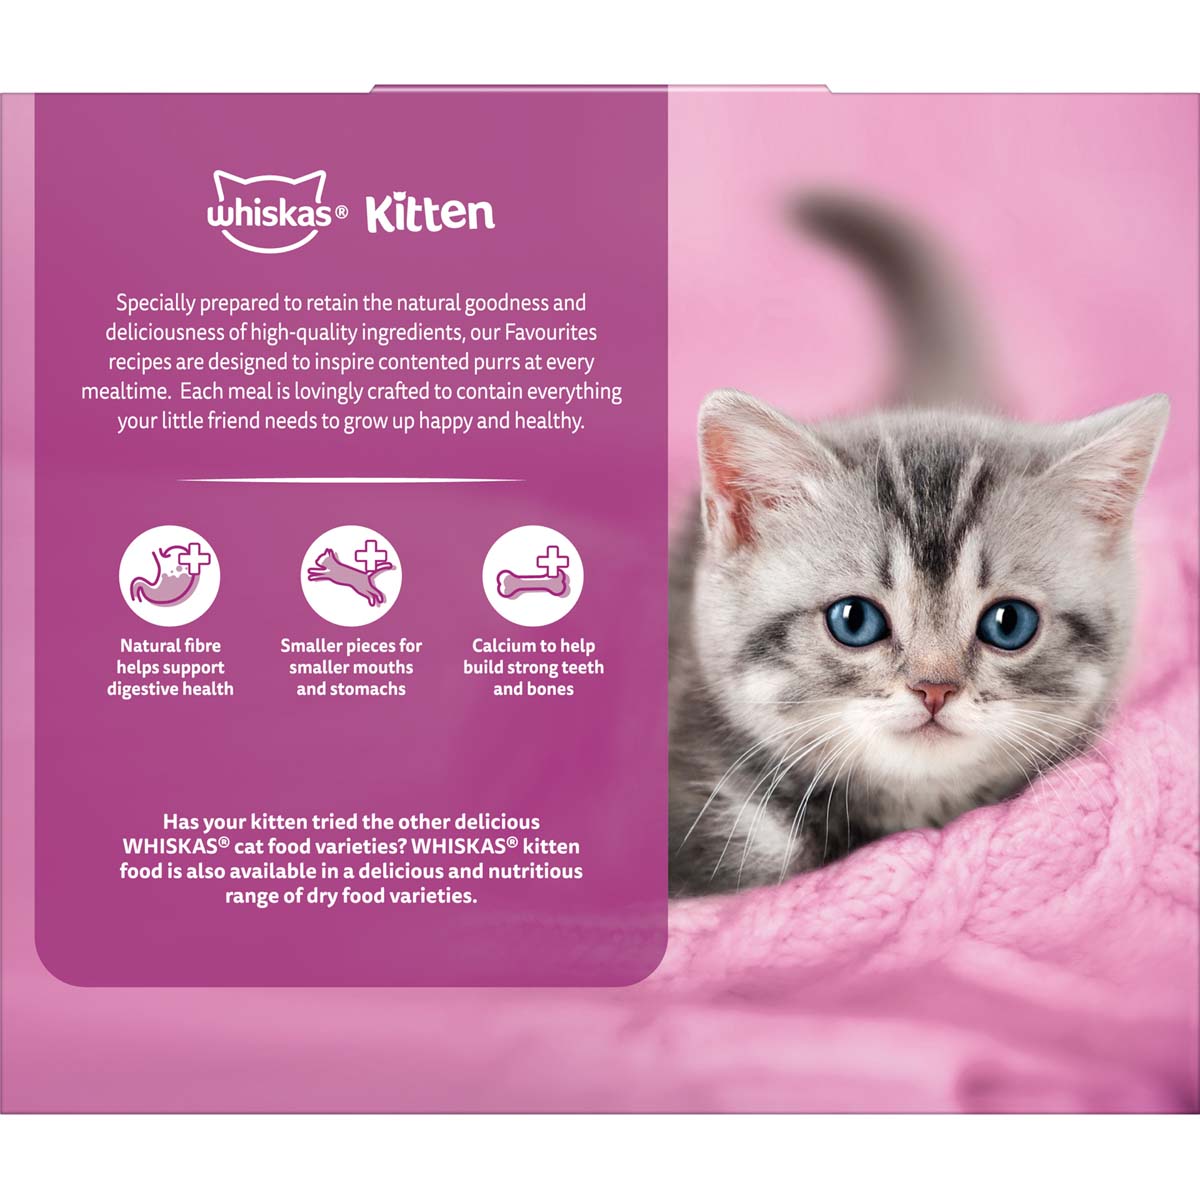 Whiskas Favourites Kitten Mixed Favourites In Jelly 12x85g